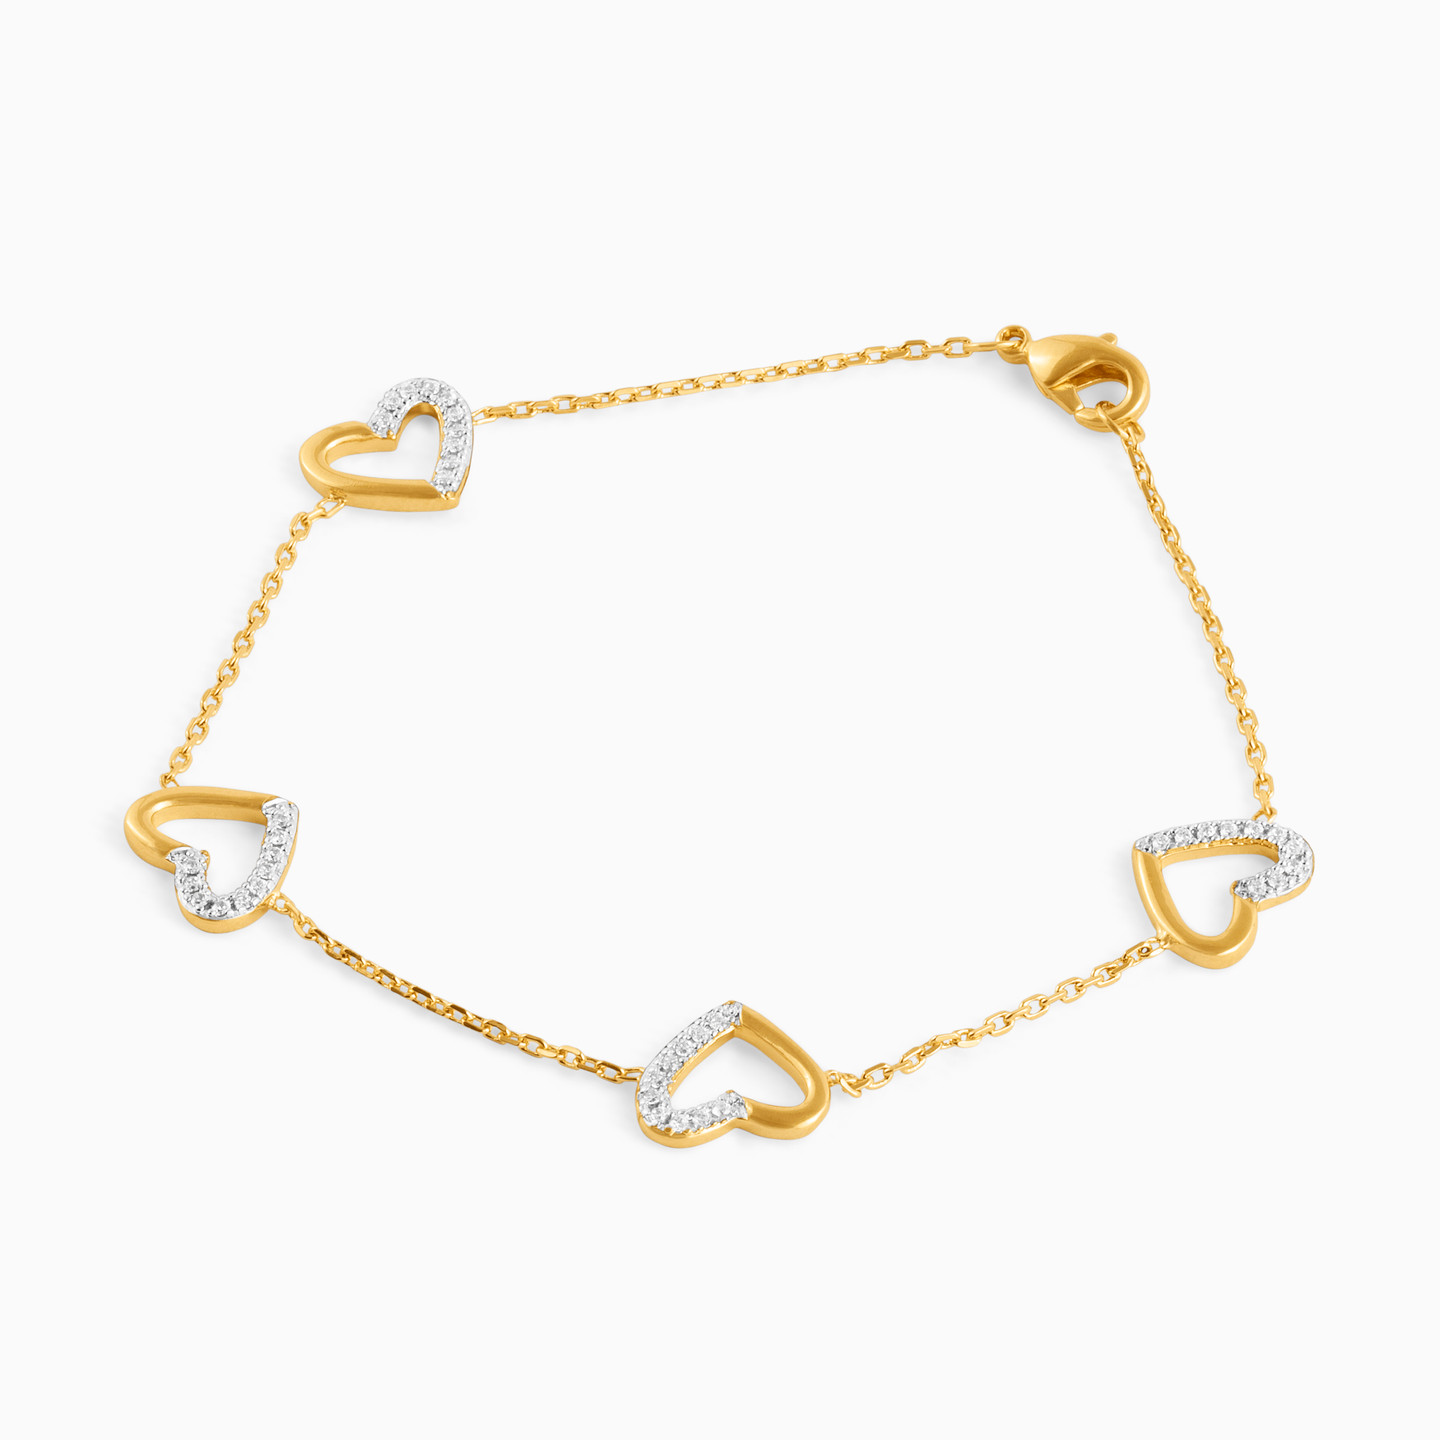 Gold Cubic Zirconia Chain Bracelet - 2